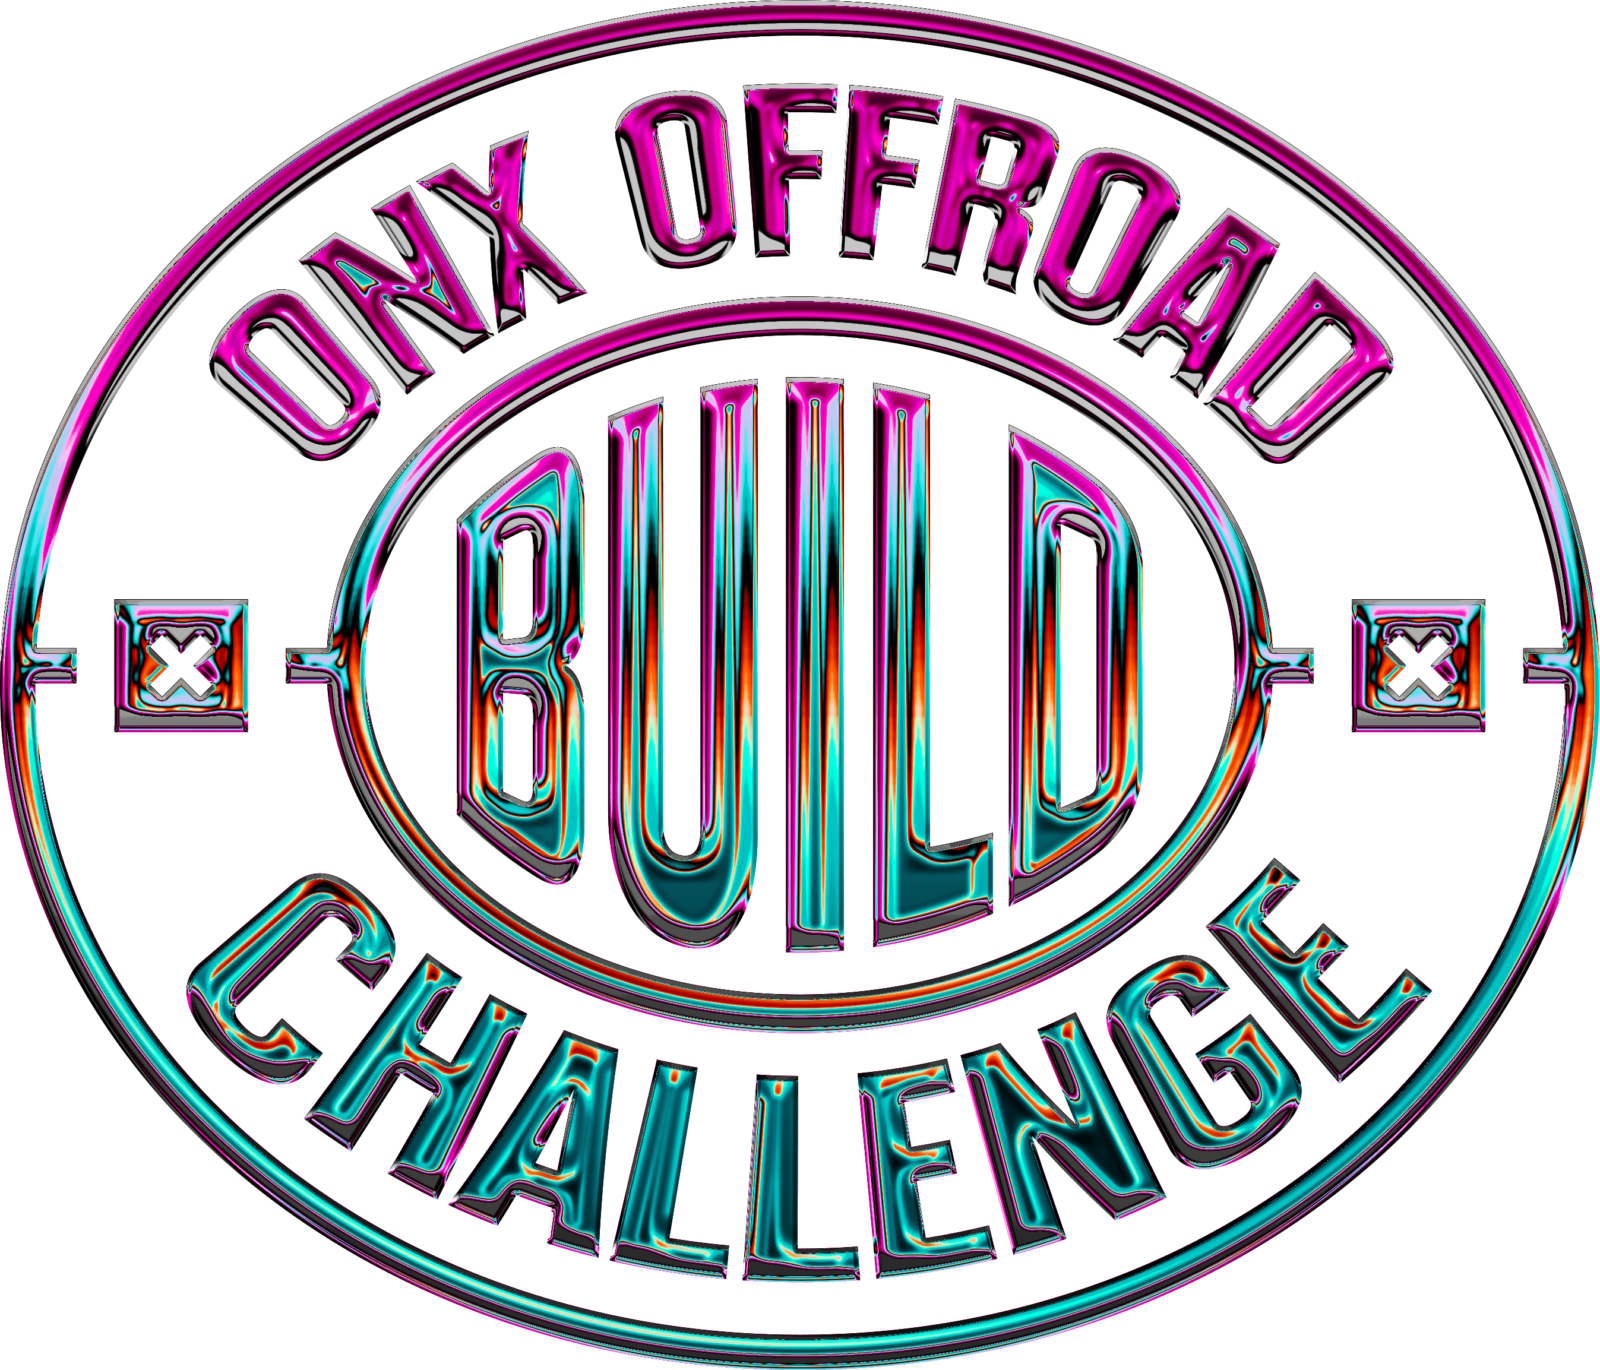 onx offroad build challenge logo